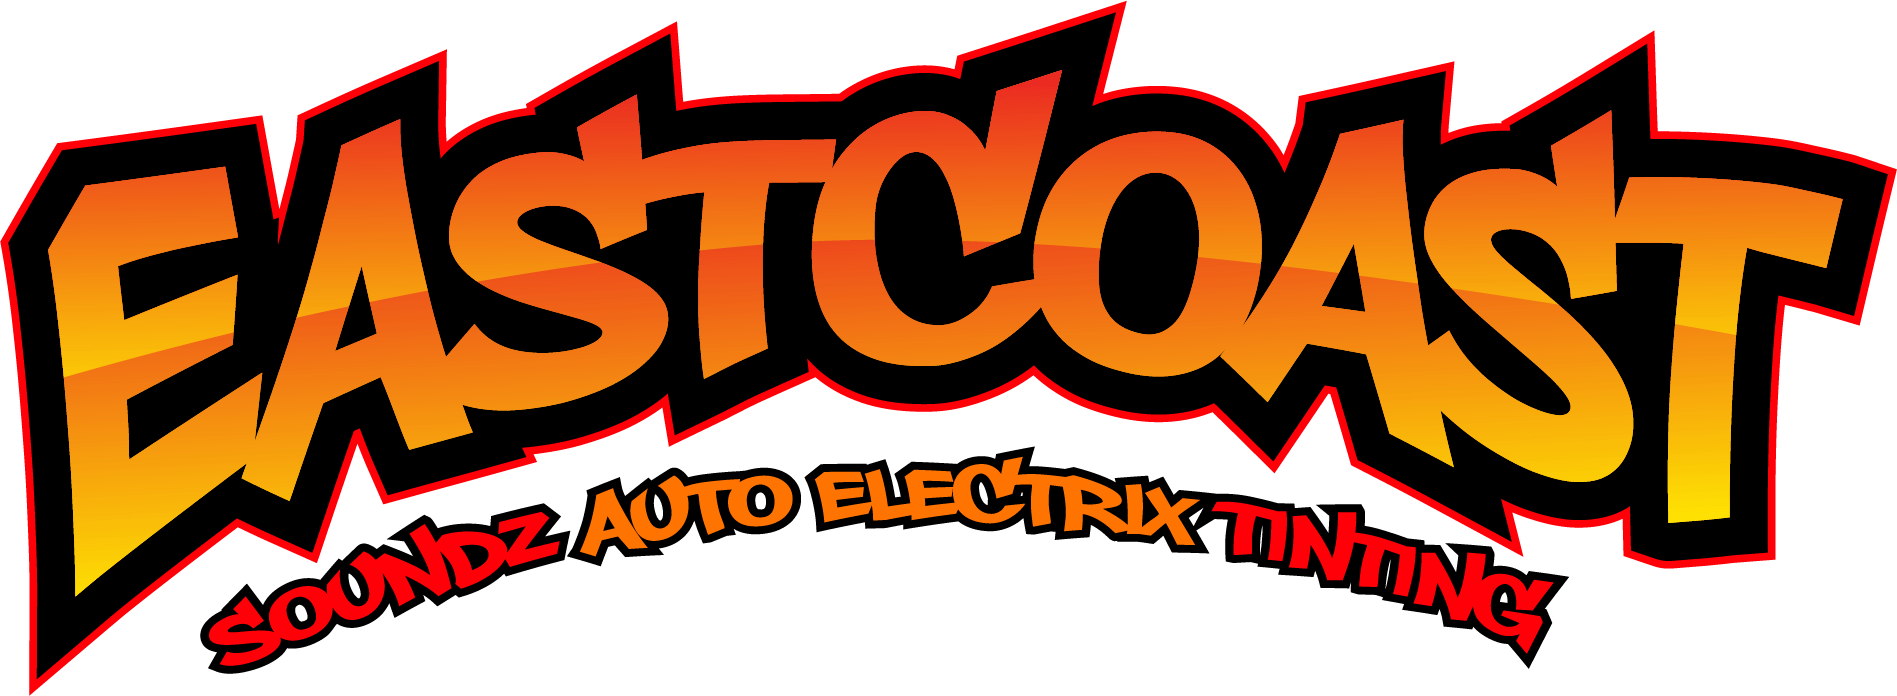 East Coast Soundz & Auto Electrix